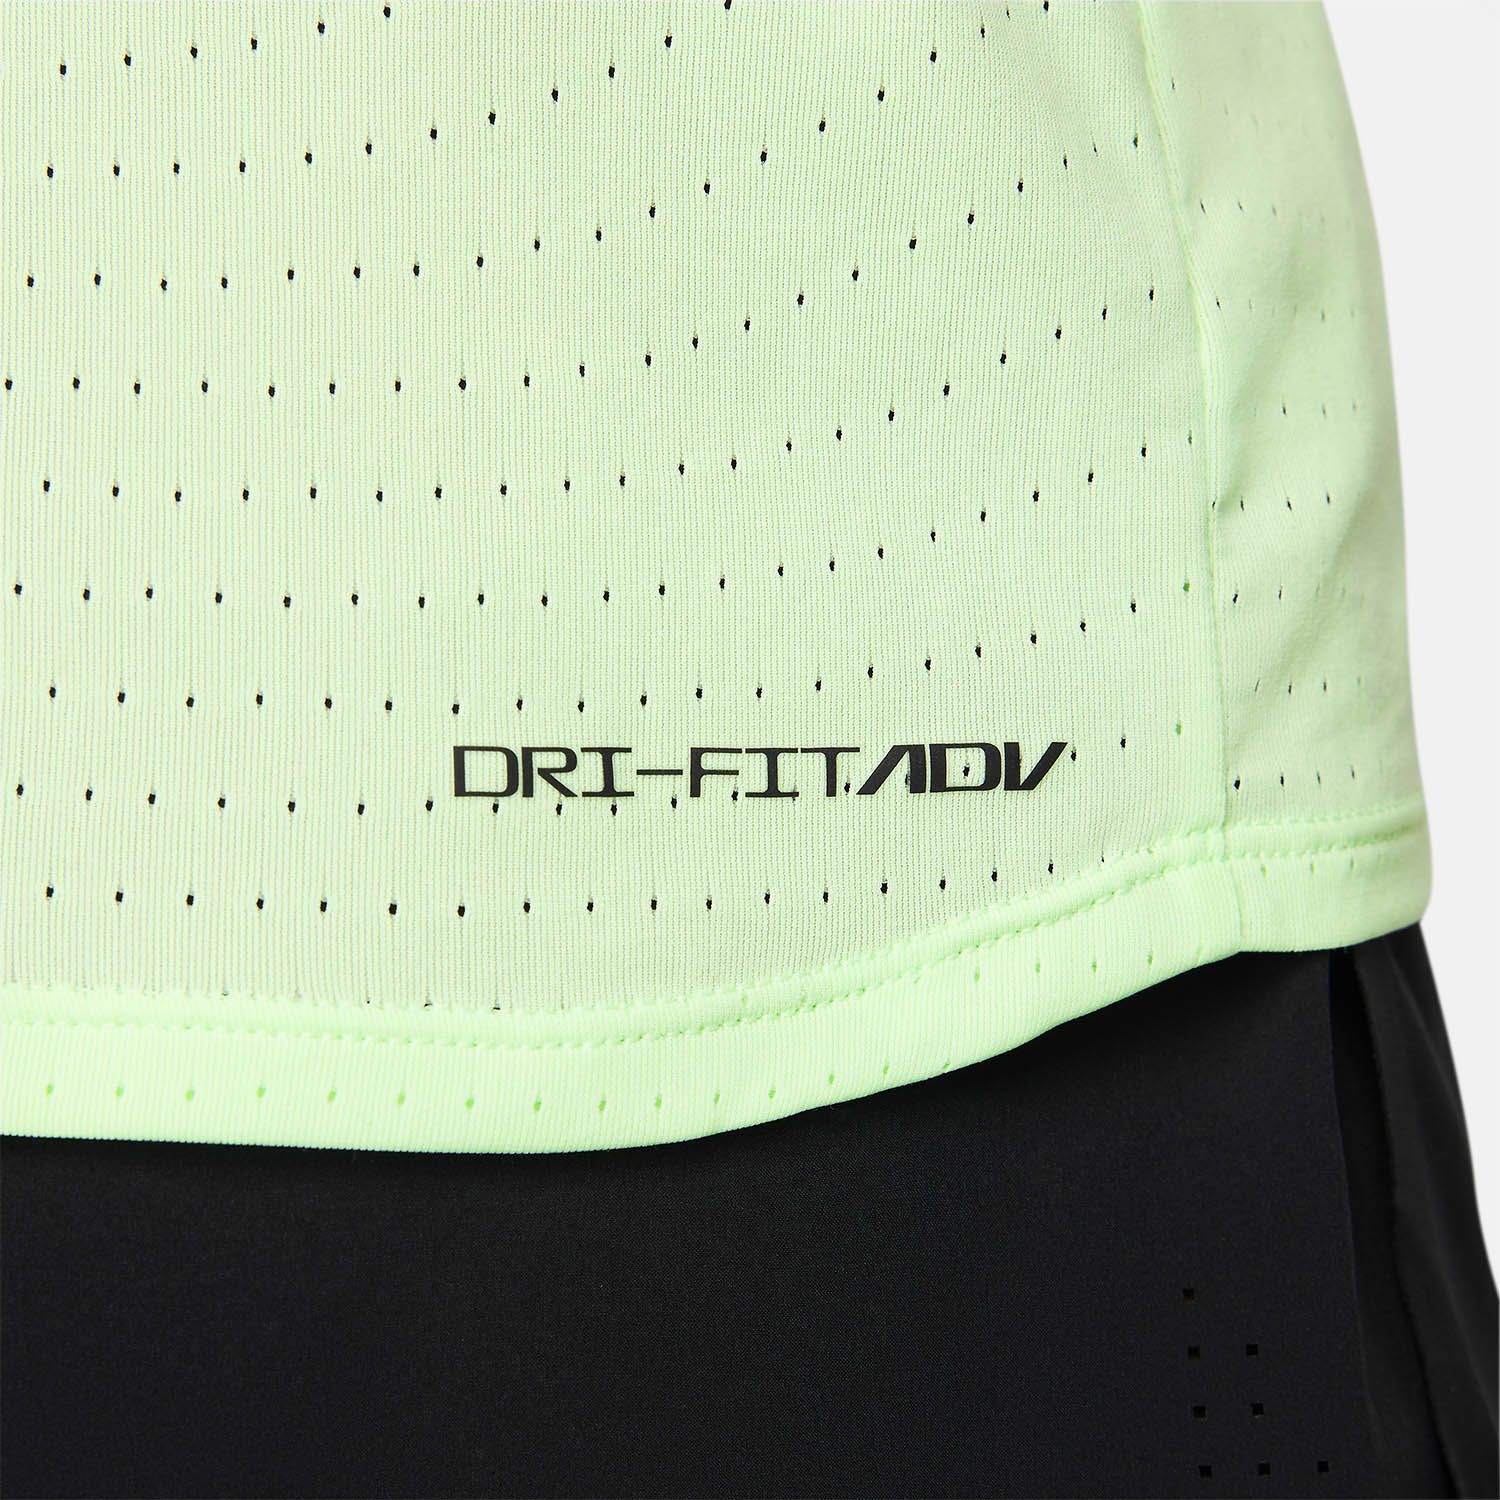 Nike Dri-FIT ADV AeroSwift Tank - Vapor Green/Black